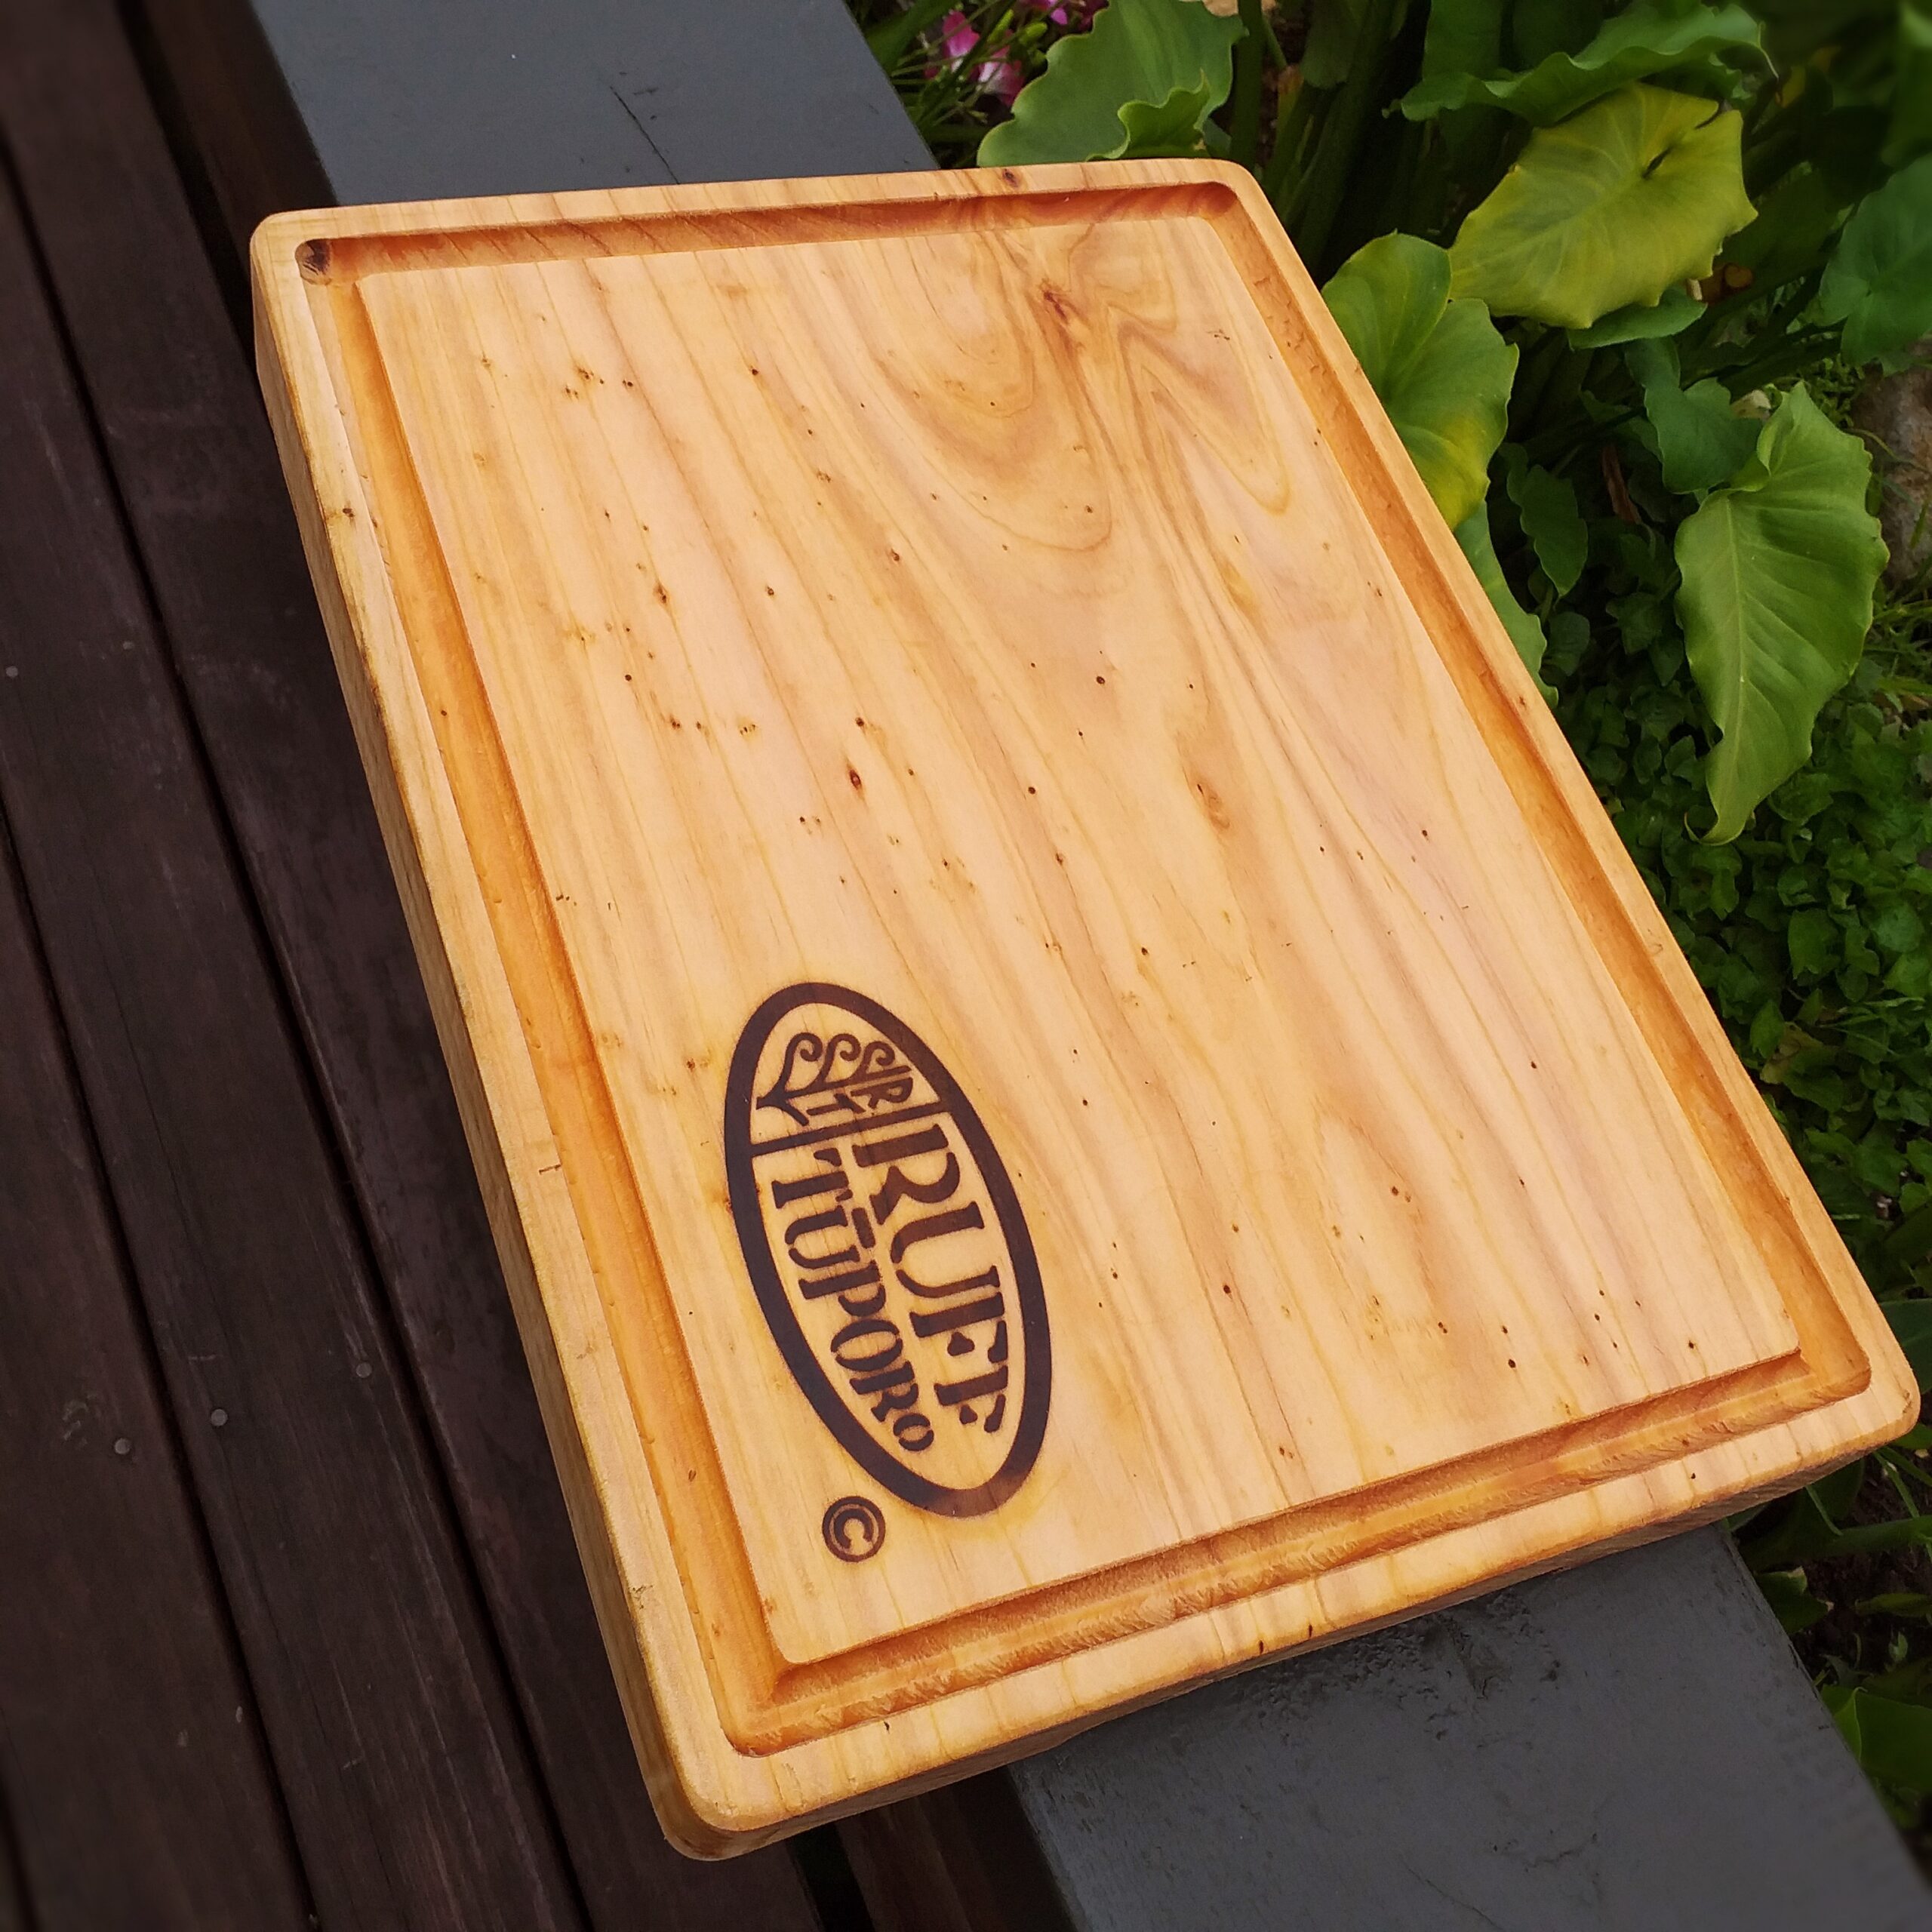 RAKAU Small Wood Cutting Board